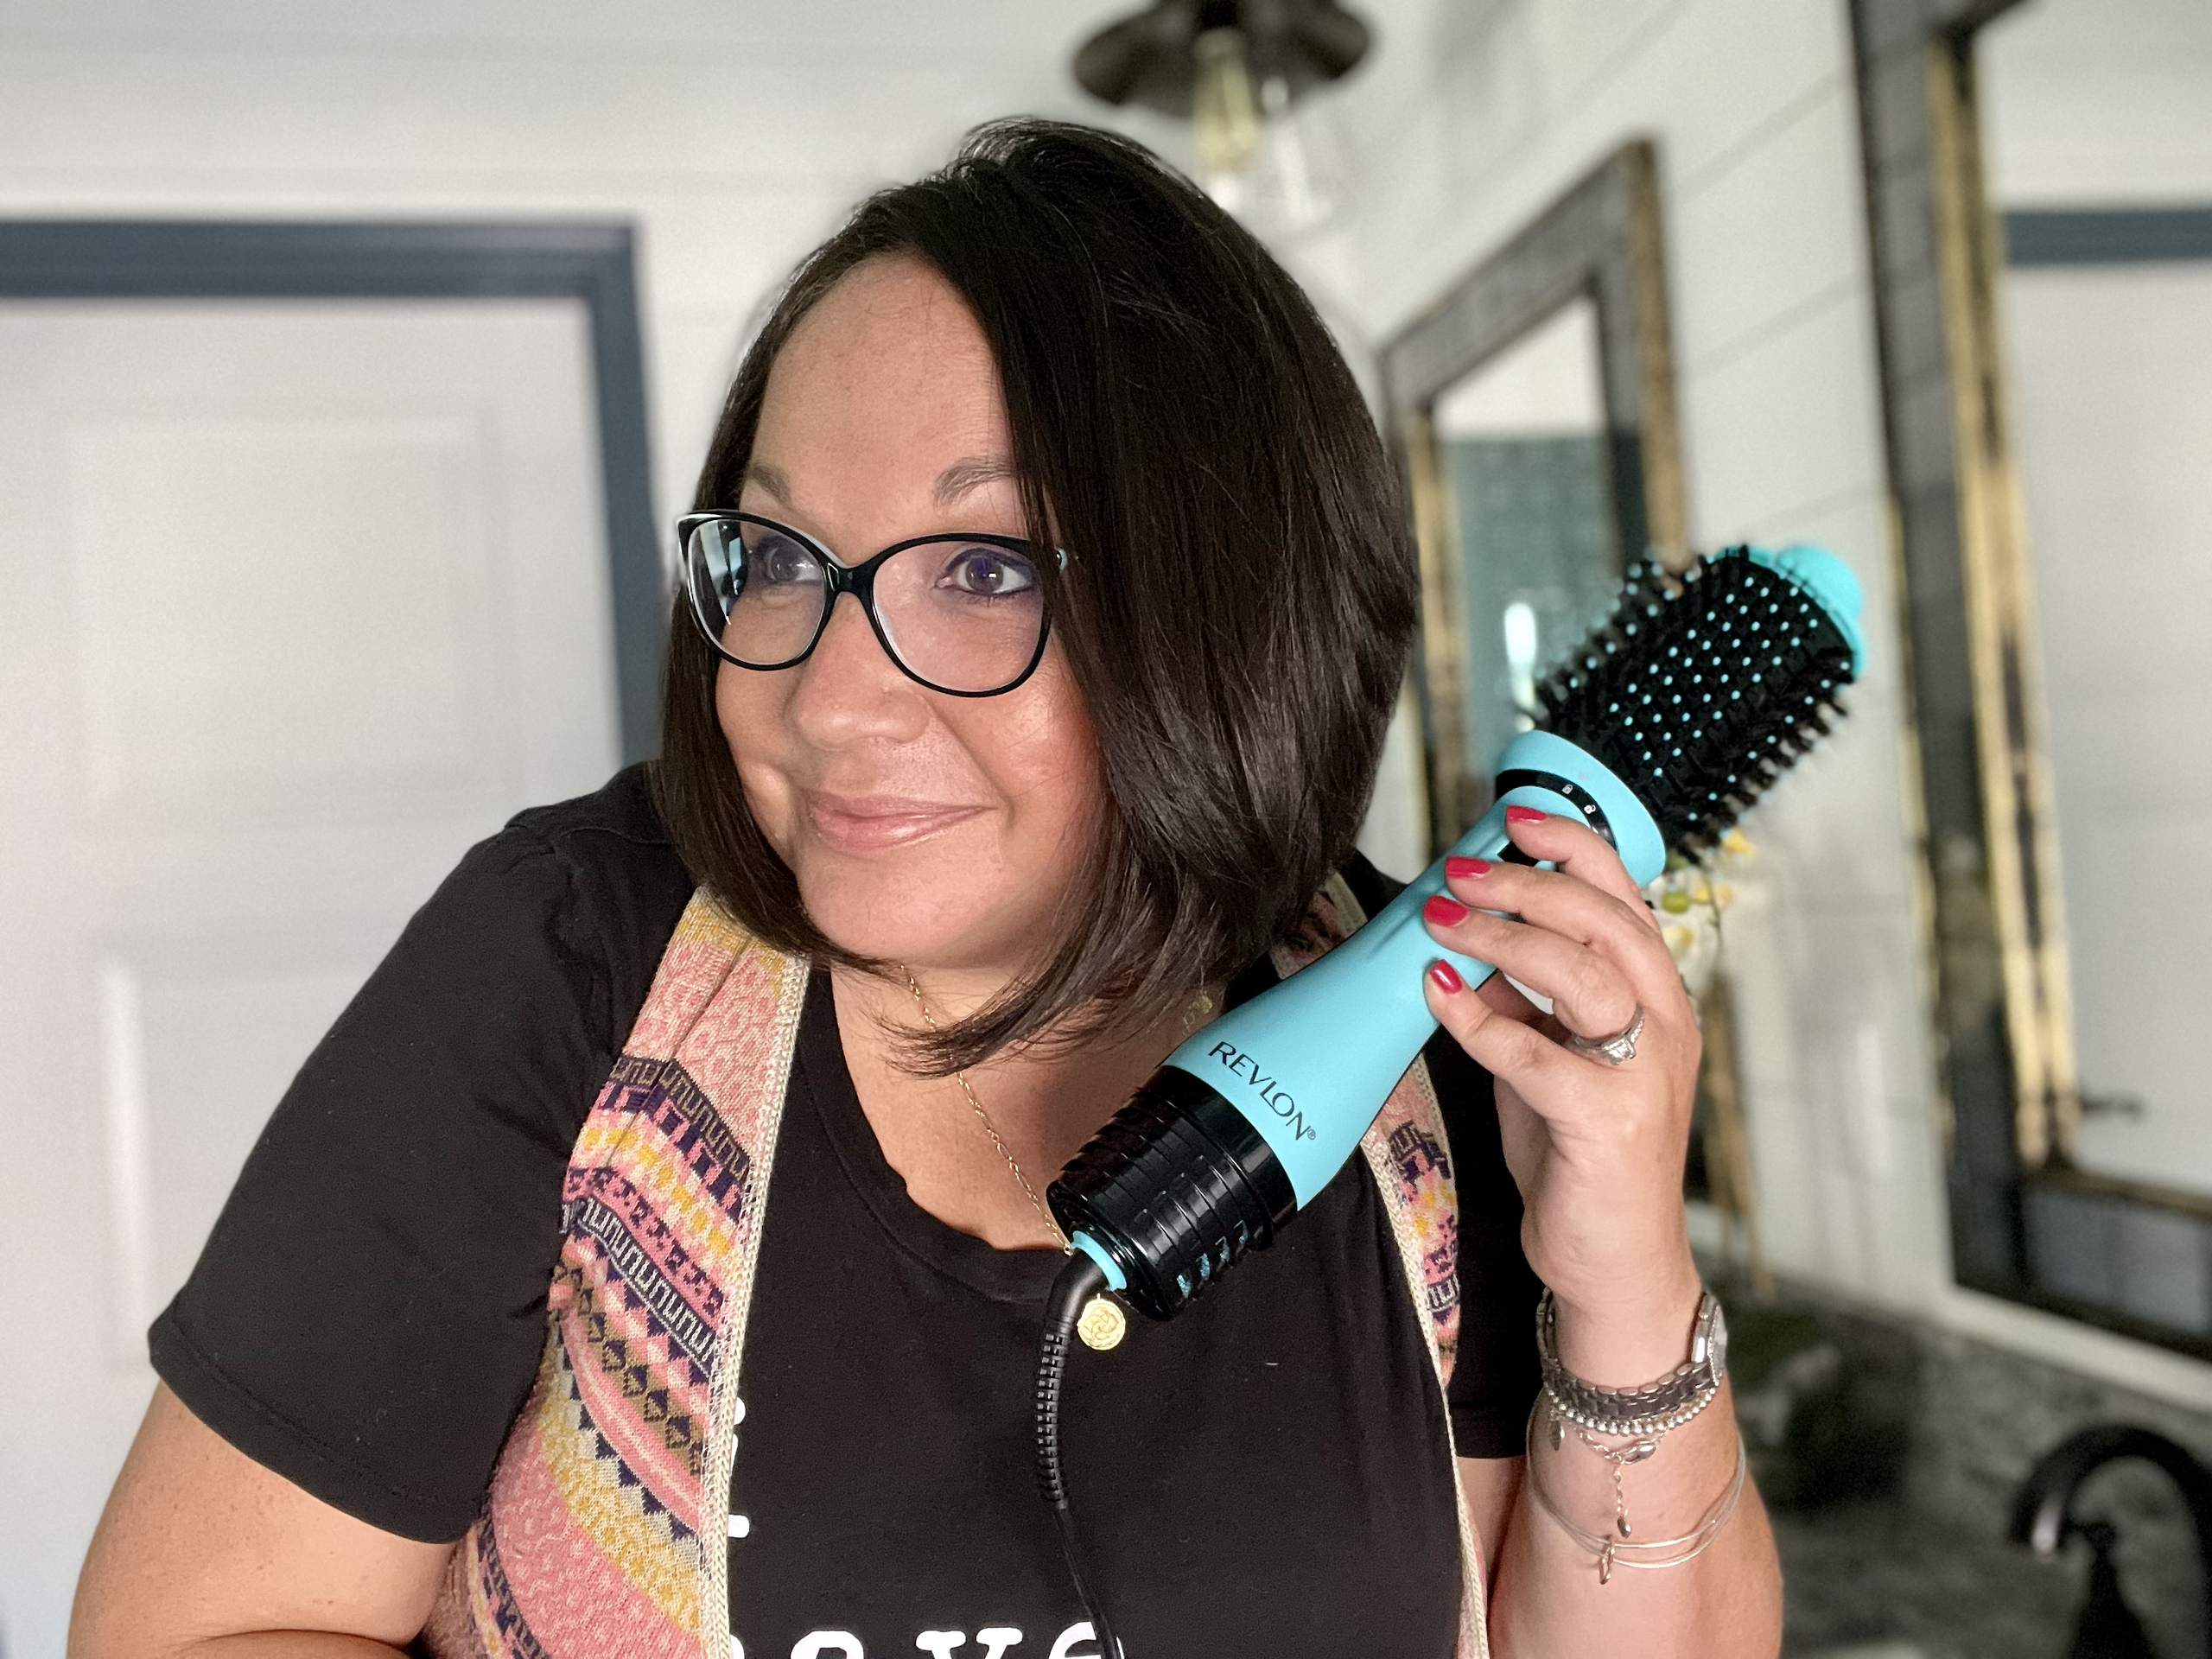 woman holding revlon blow dryer brush 2.0 next to hair